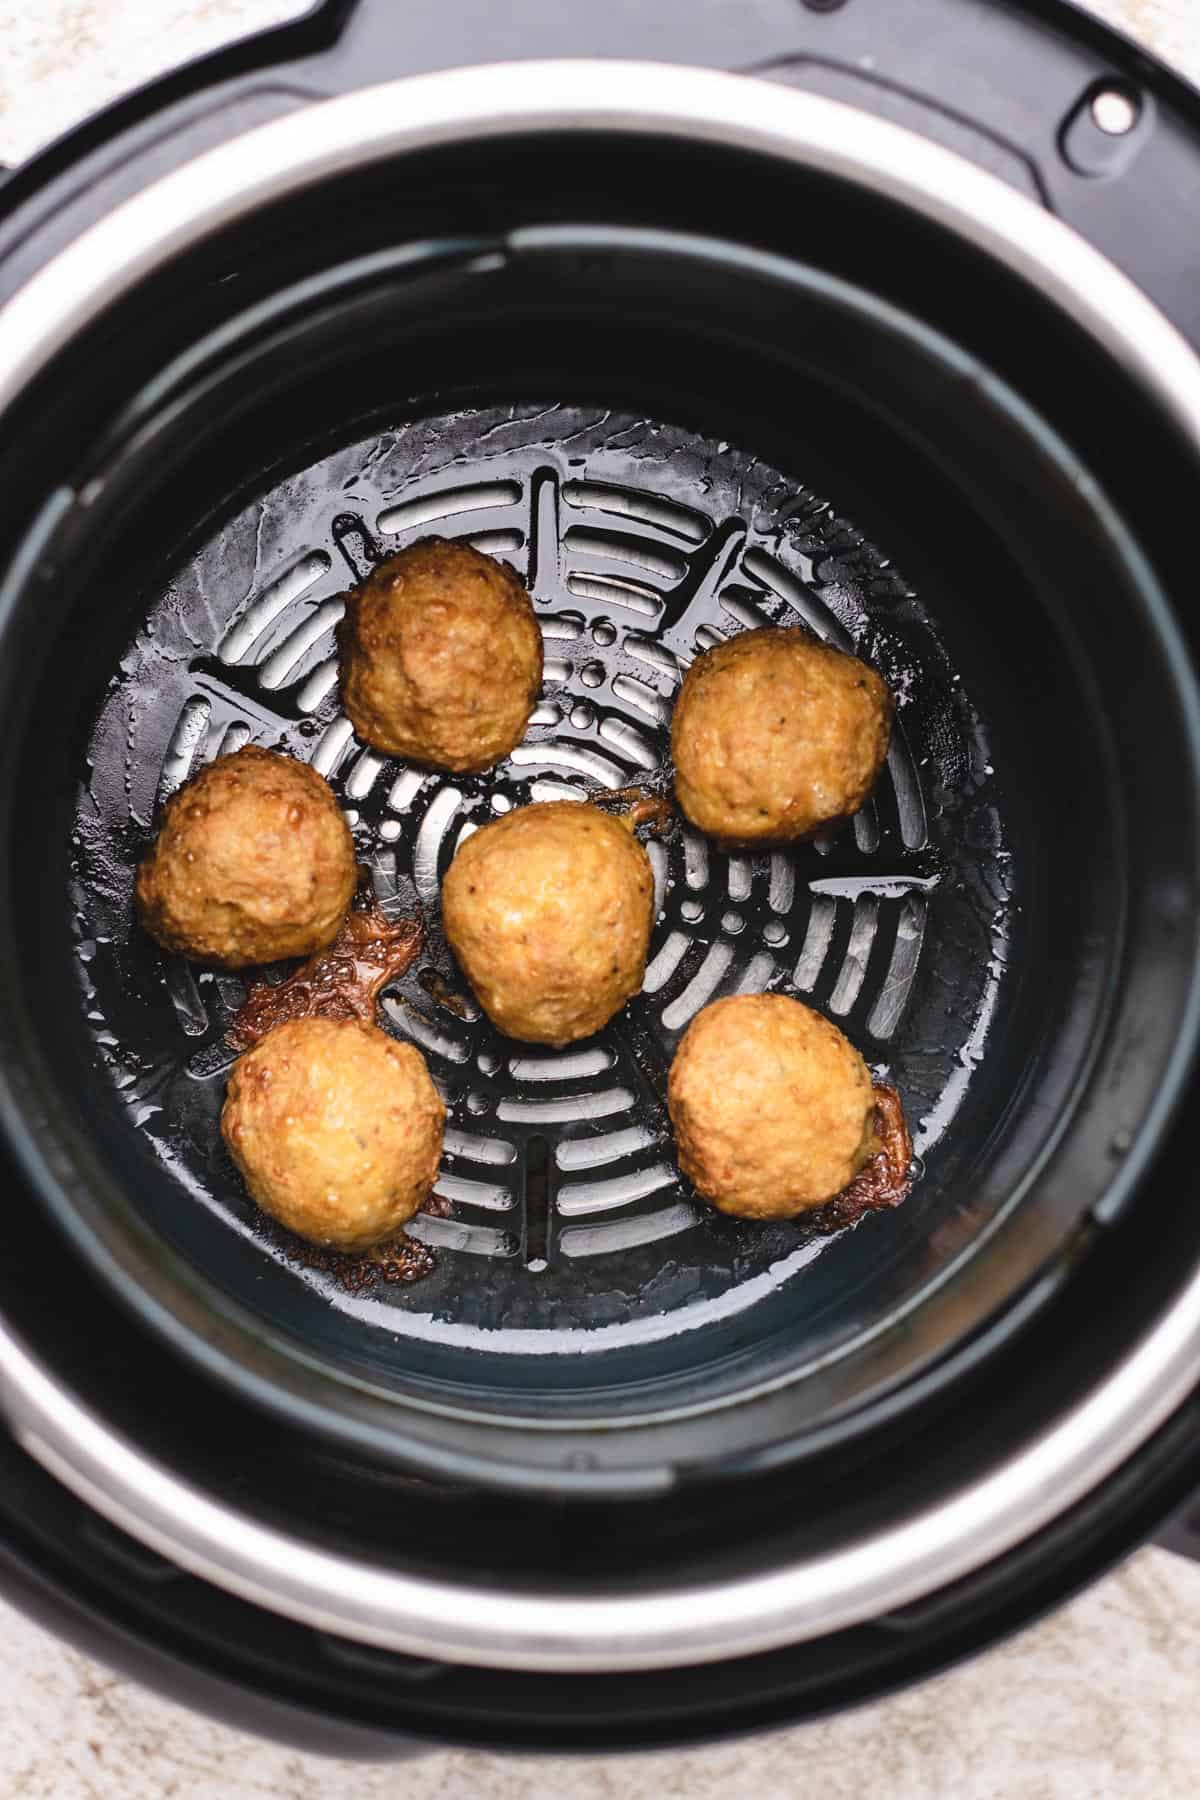 Meatballs inside of air fryer.